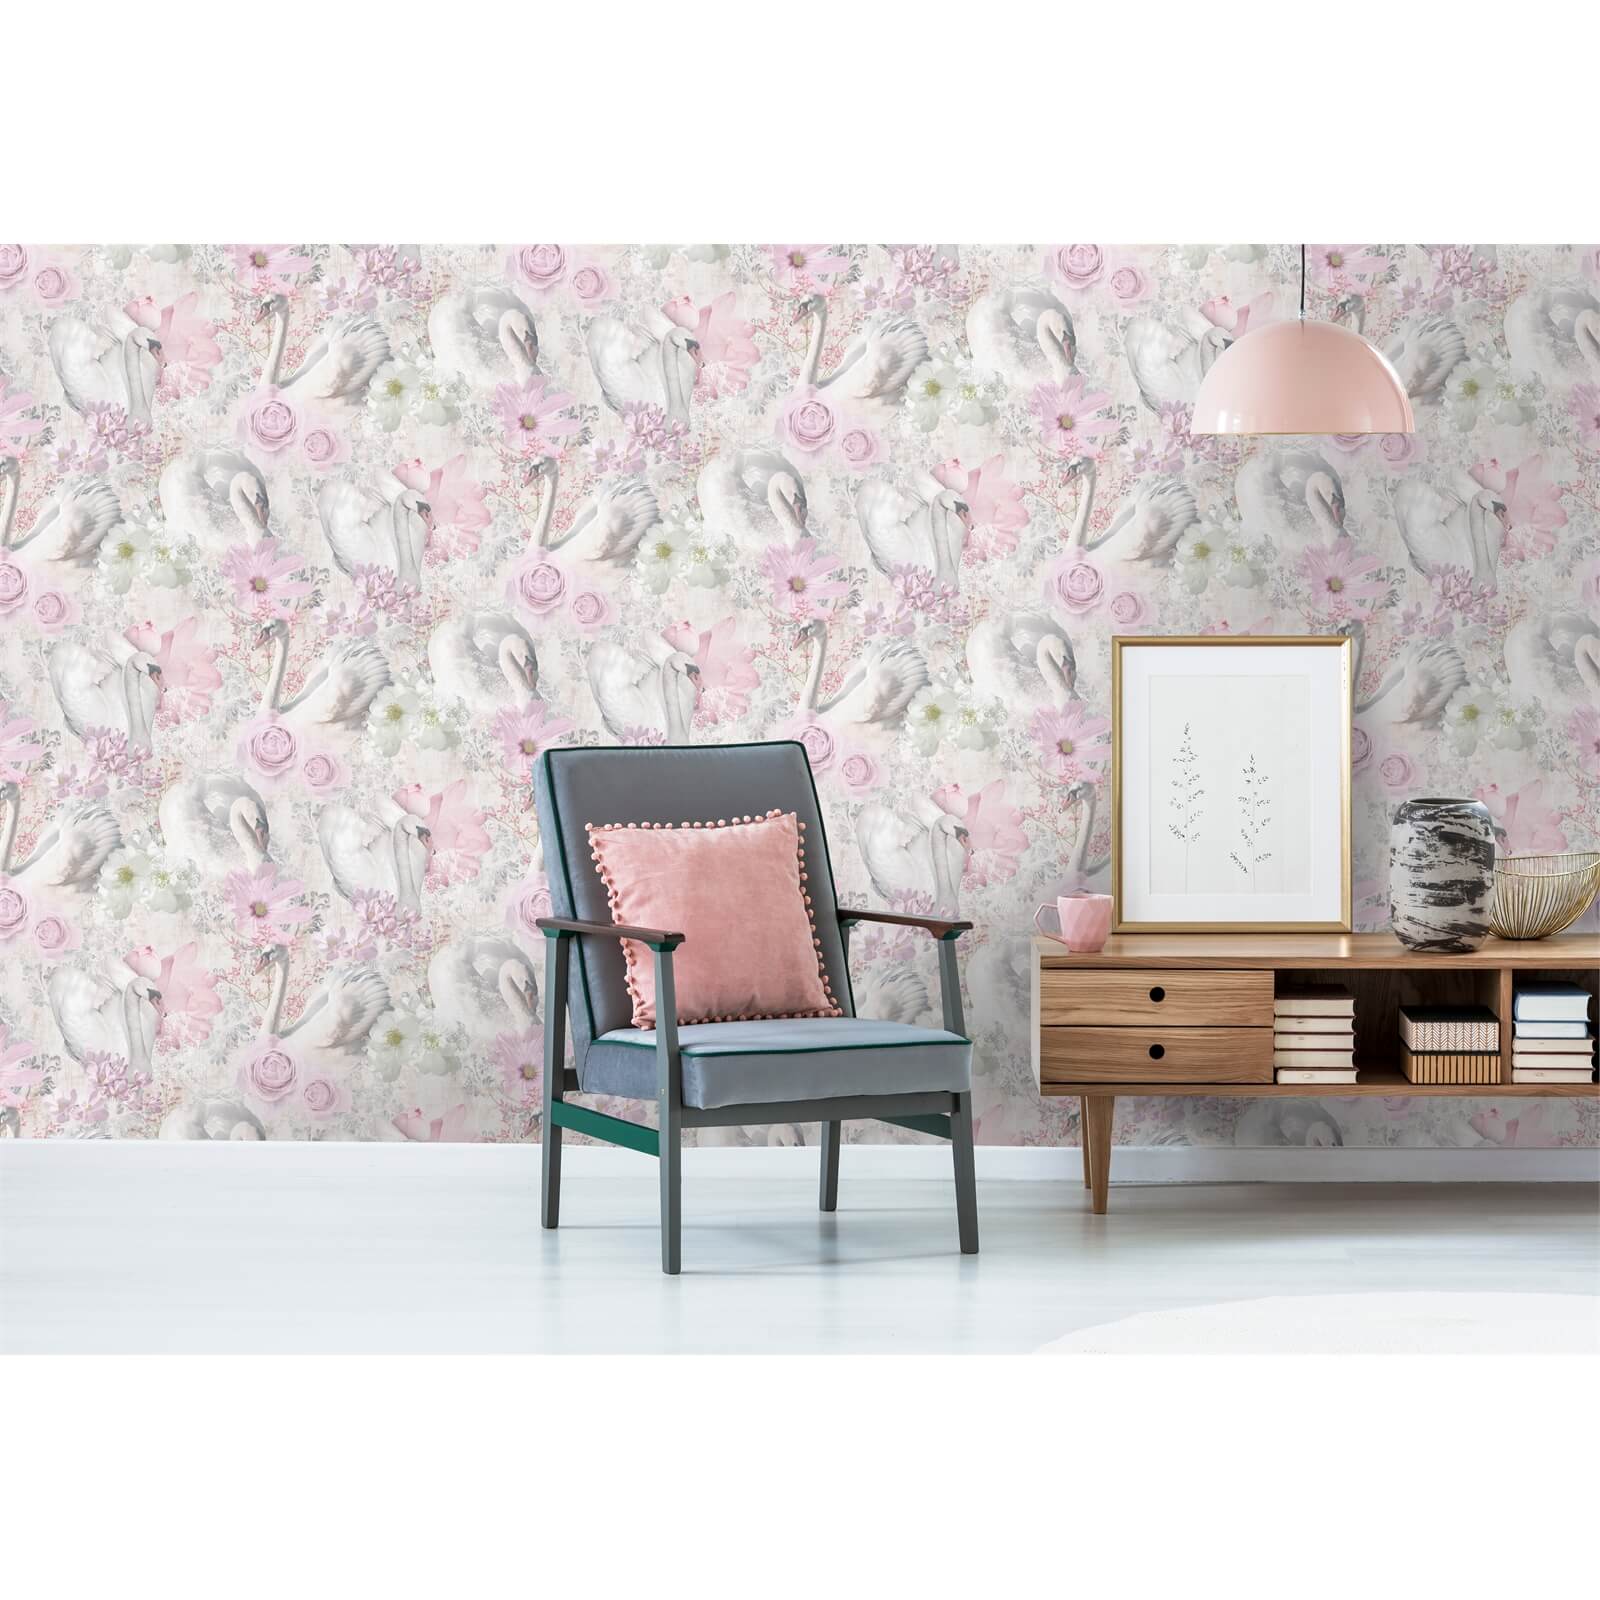 Holden Decor Glitter Swans Damask Smooth Pink Wallpaper